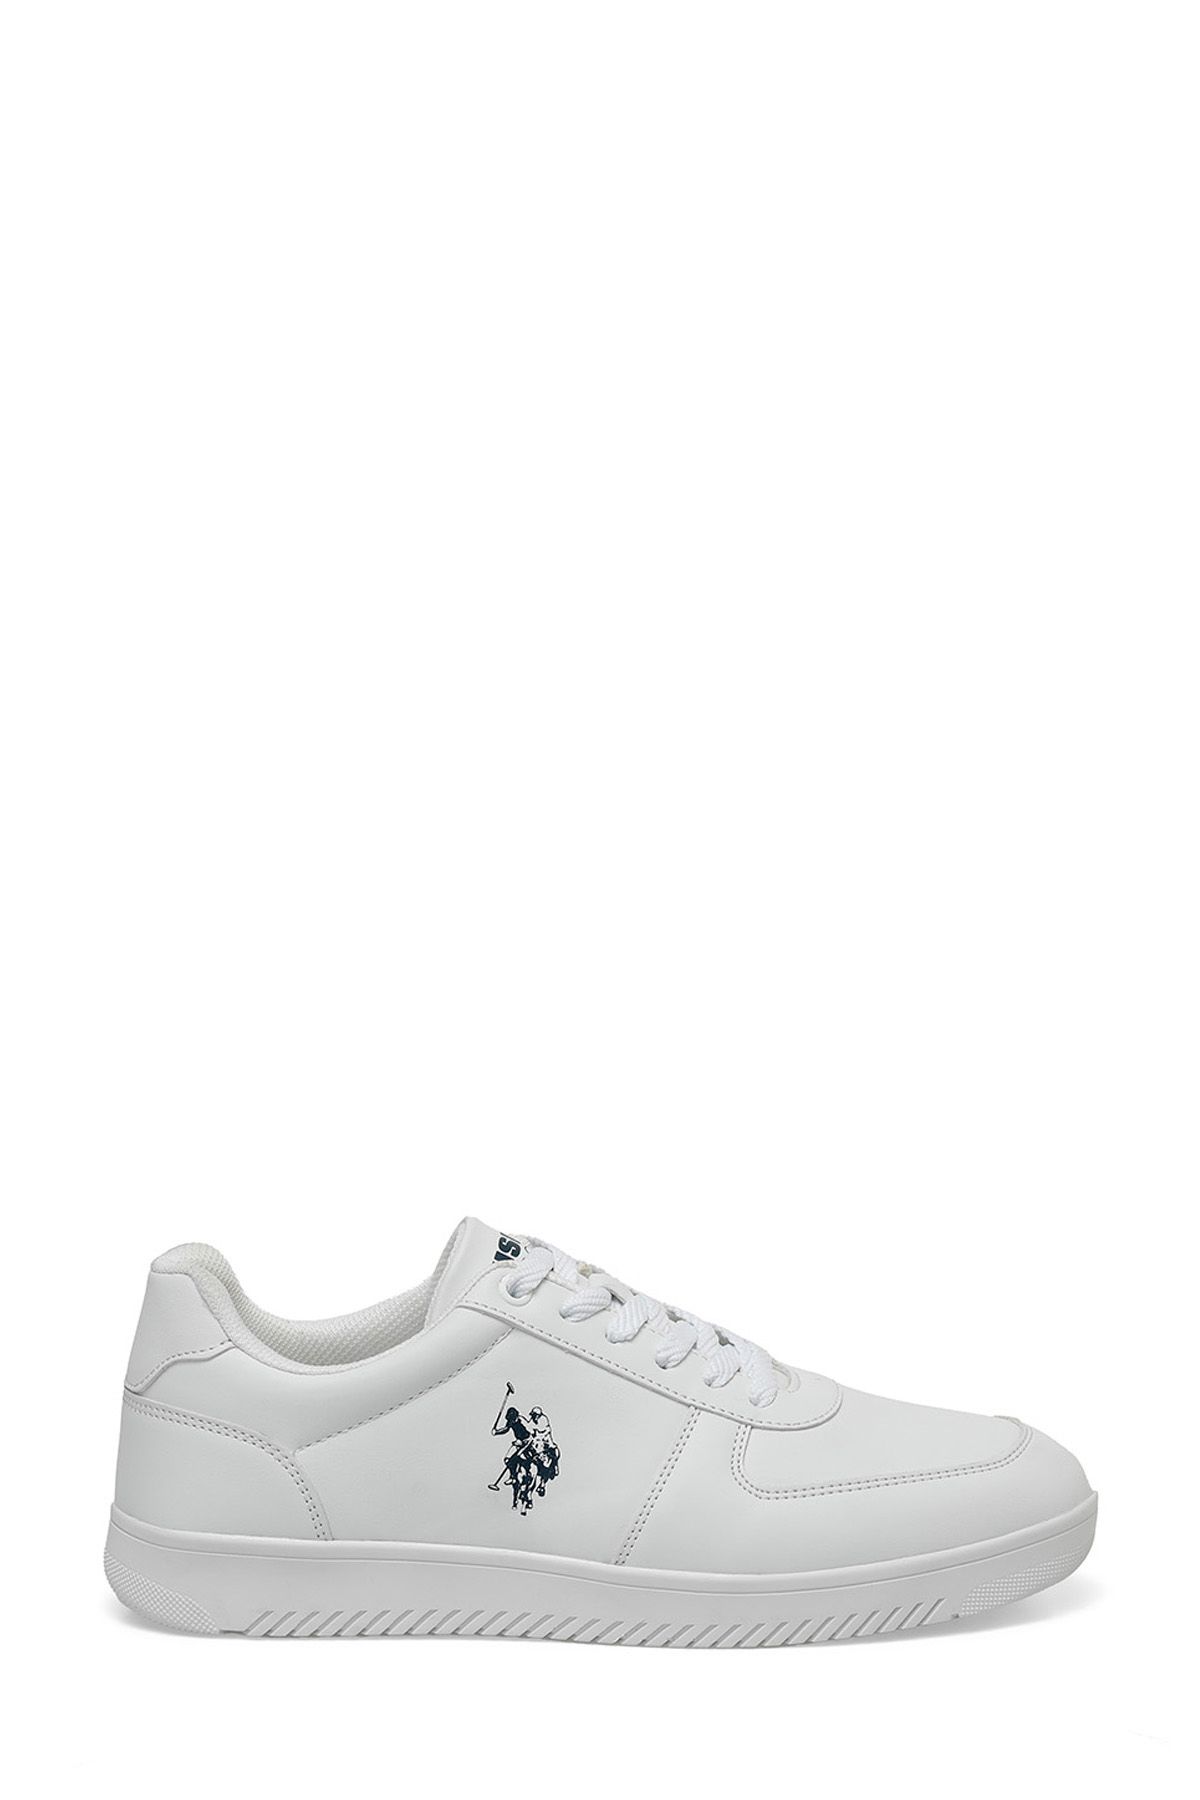 U.S. Polo Assn. KEPLER 4FX Beyaz Erkek Sneaker